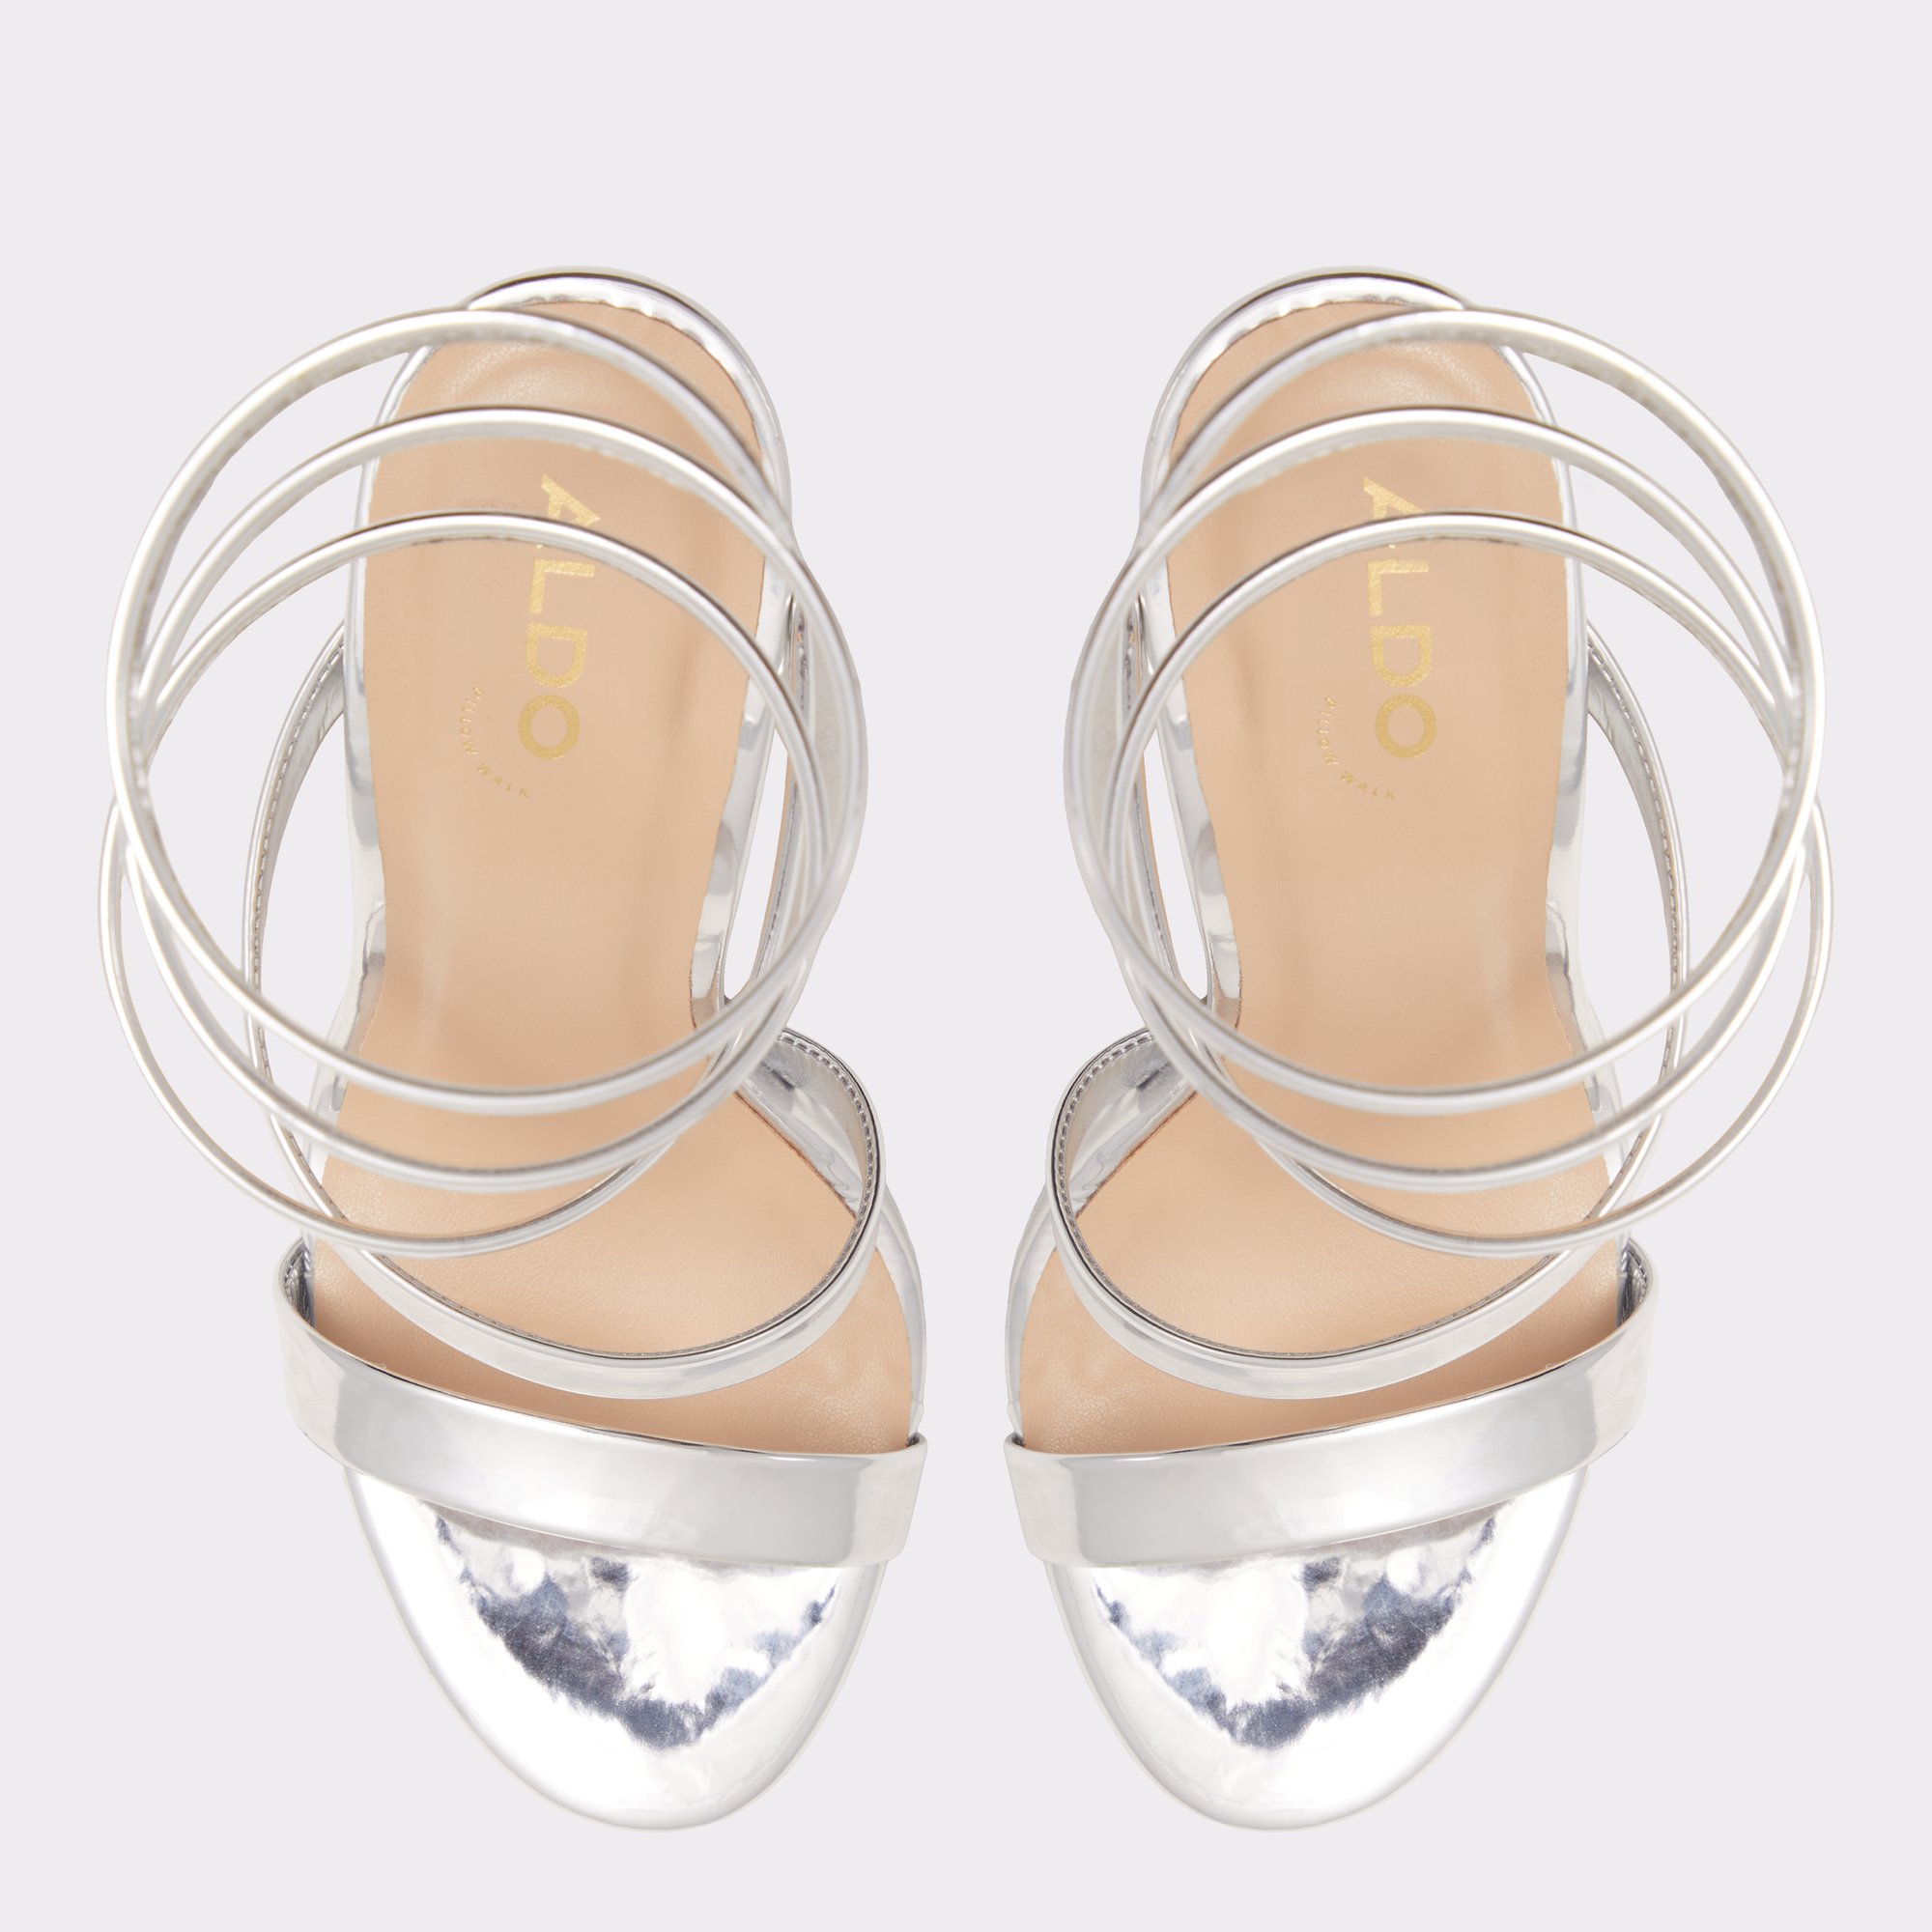 Katswirl Silver Women's Strappy sandals | ALDO Canada